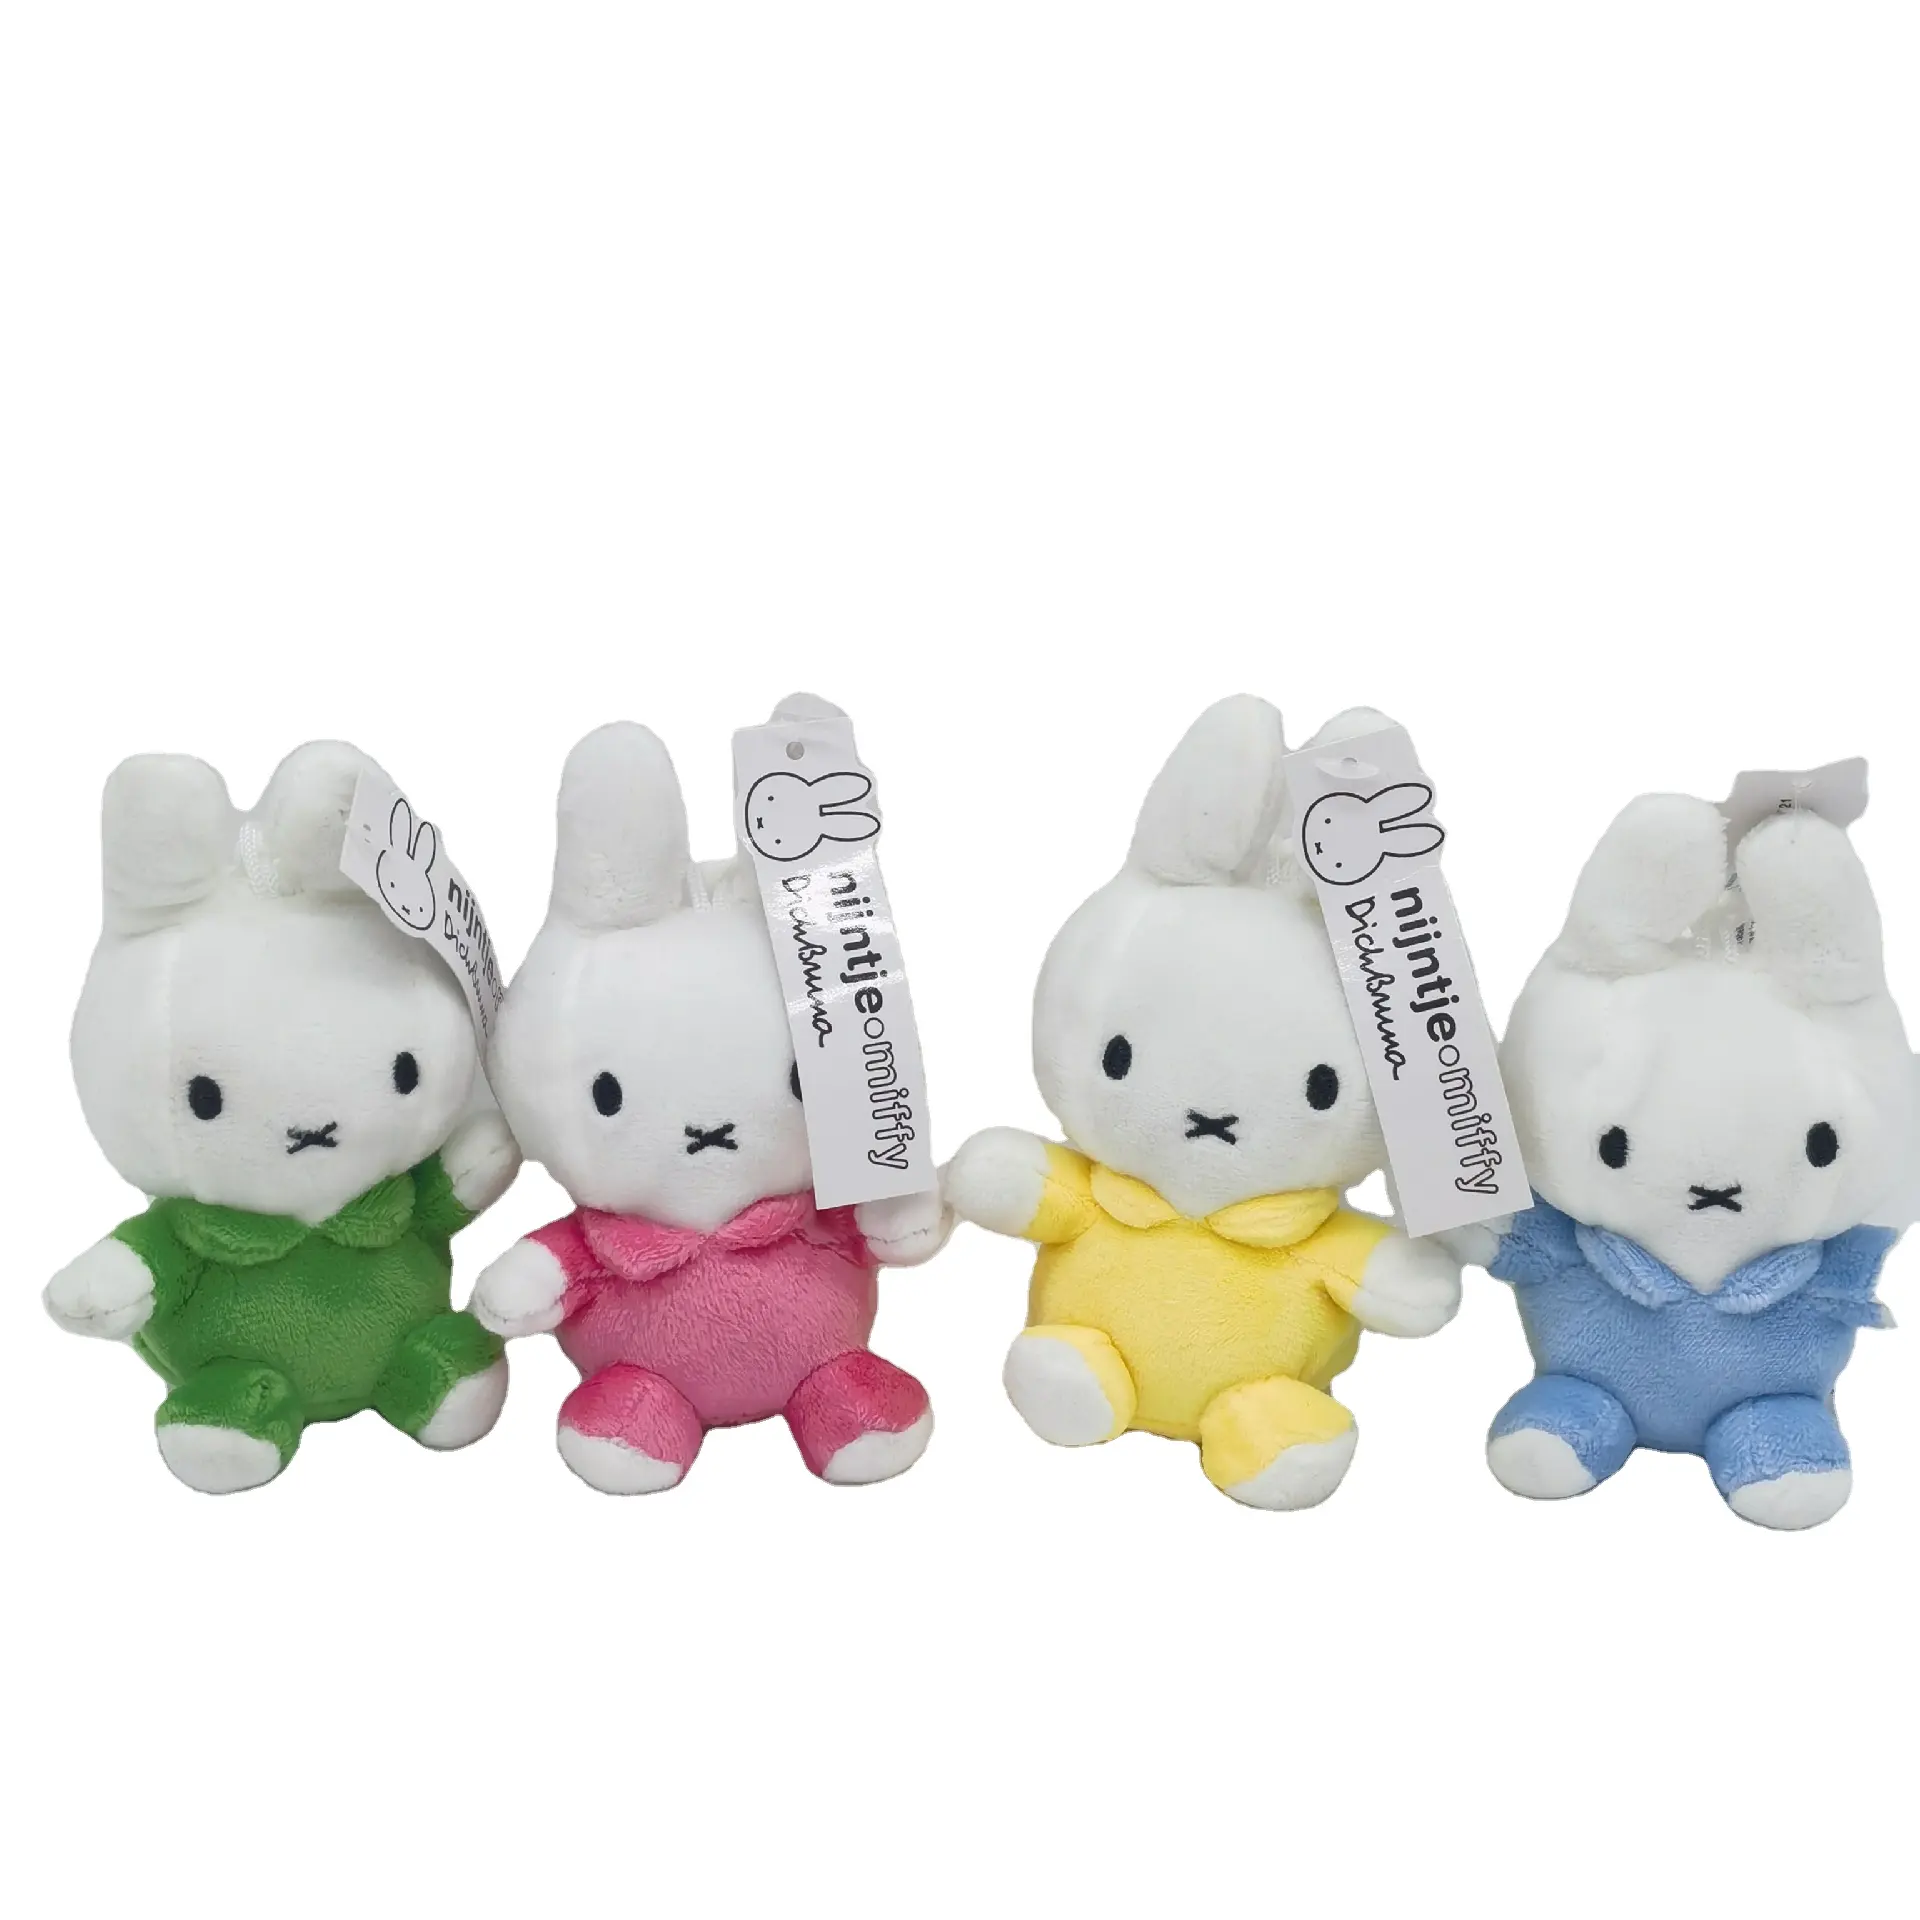 10cm lindo Miffys juguete de peluche Kawaii muñeca suave estilo Popular conejo Animal llavero Anime dibujos animados juguete de peluche regalo